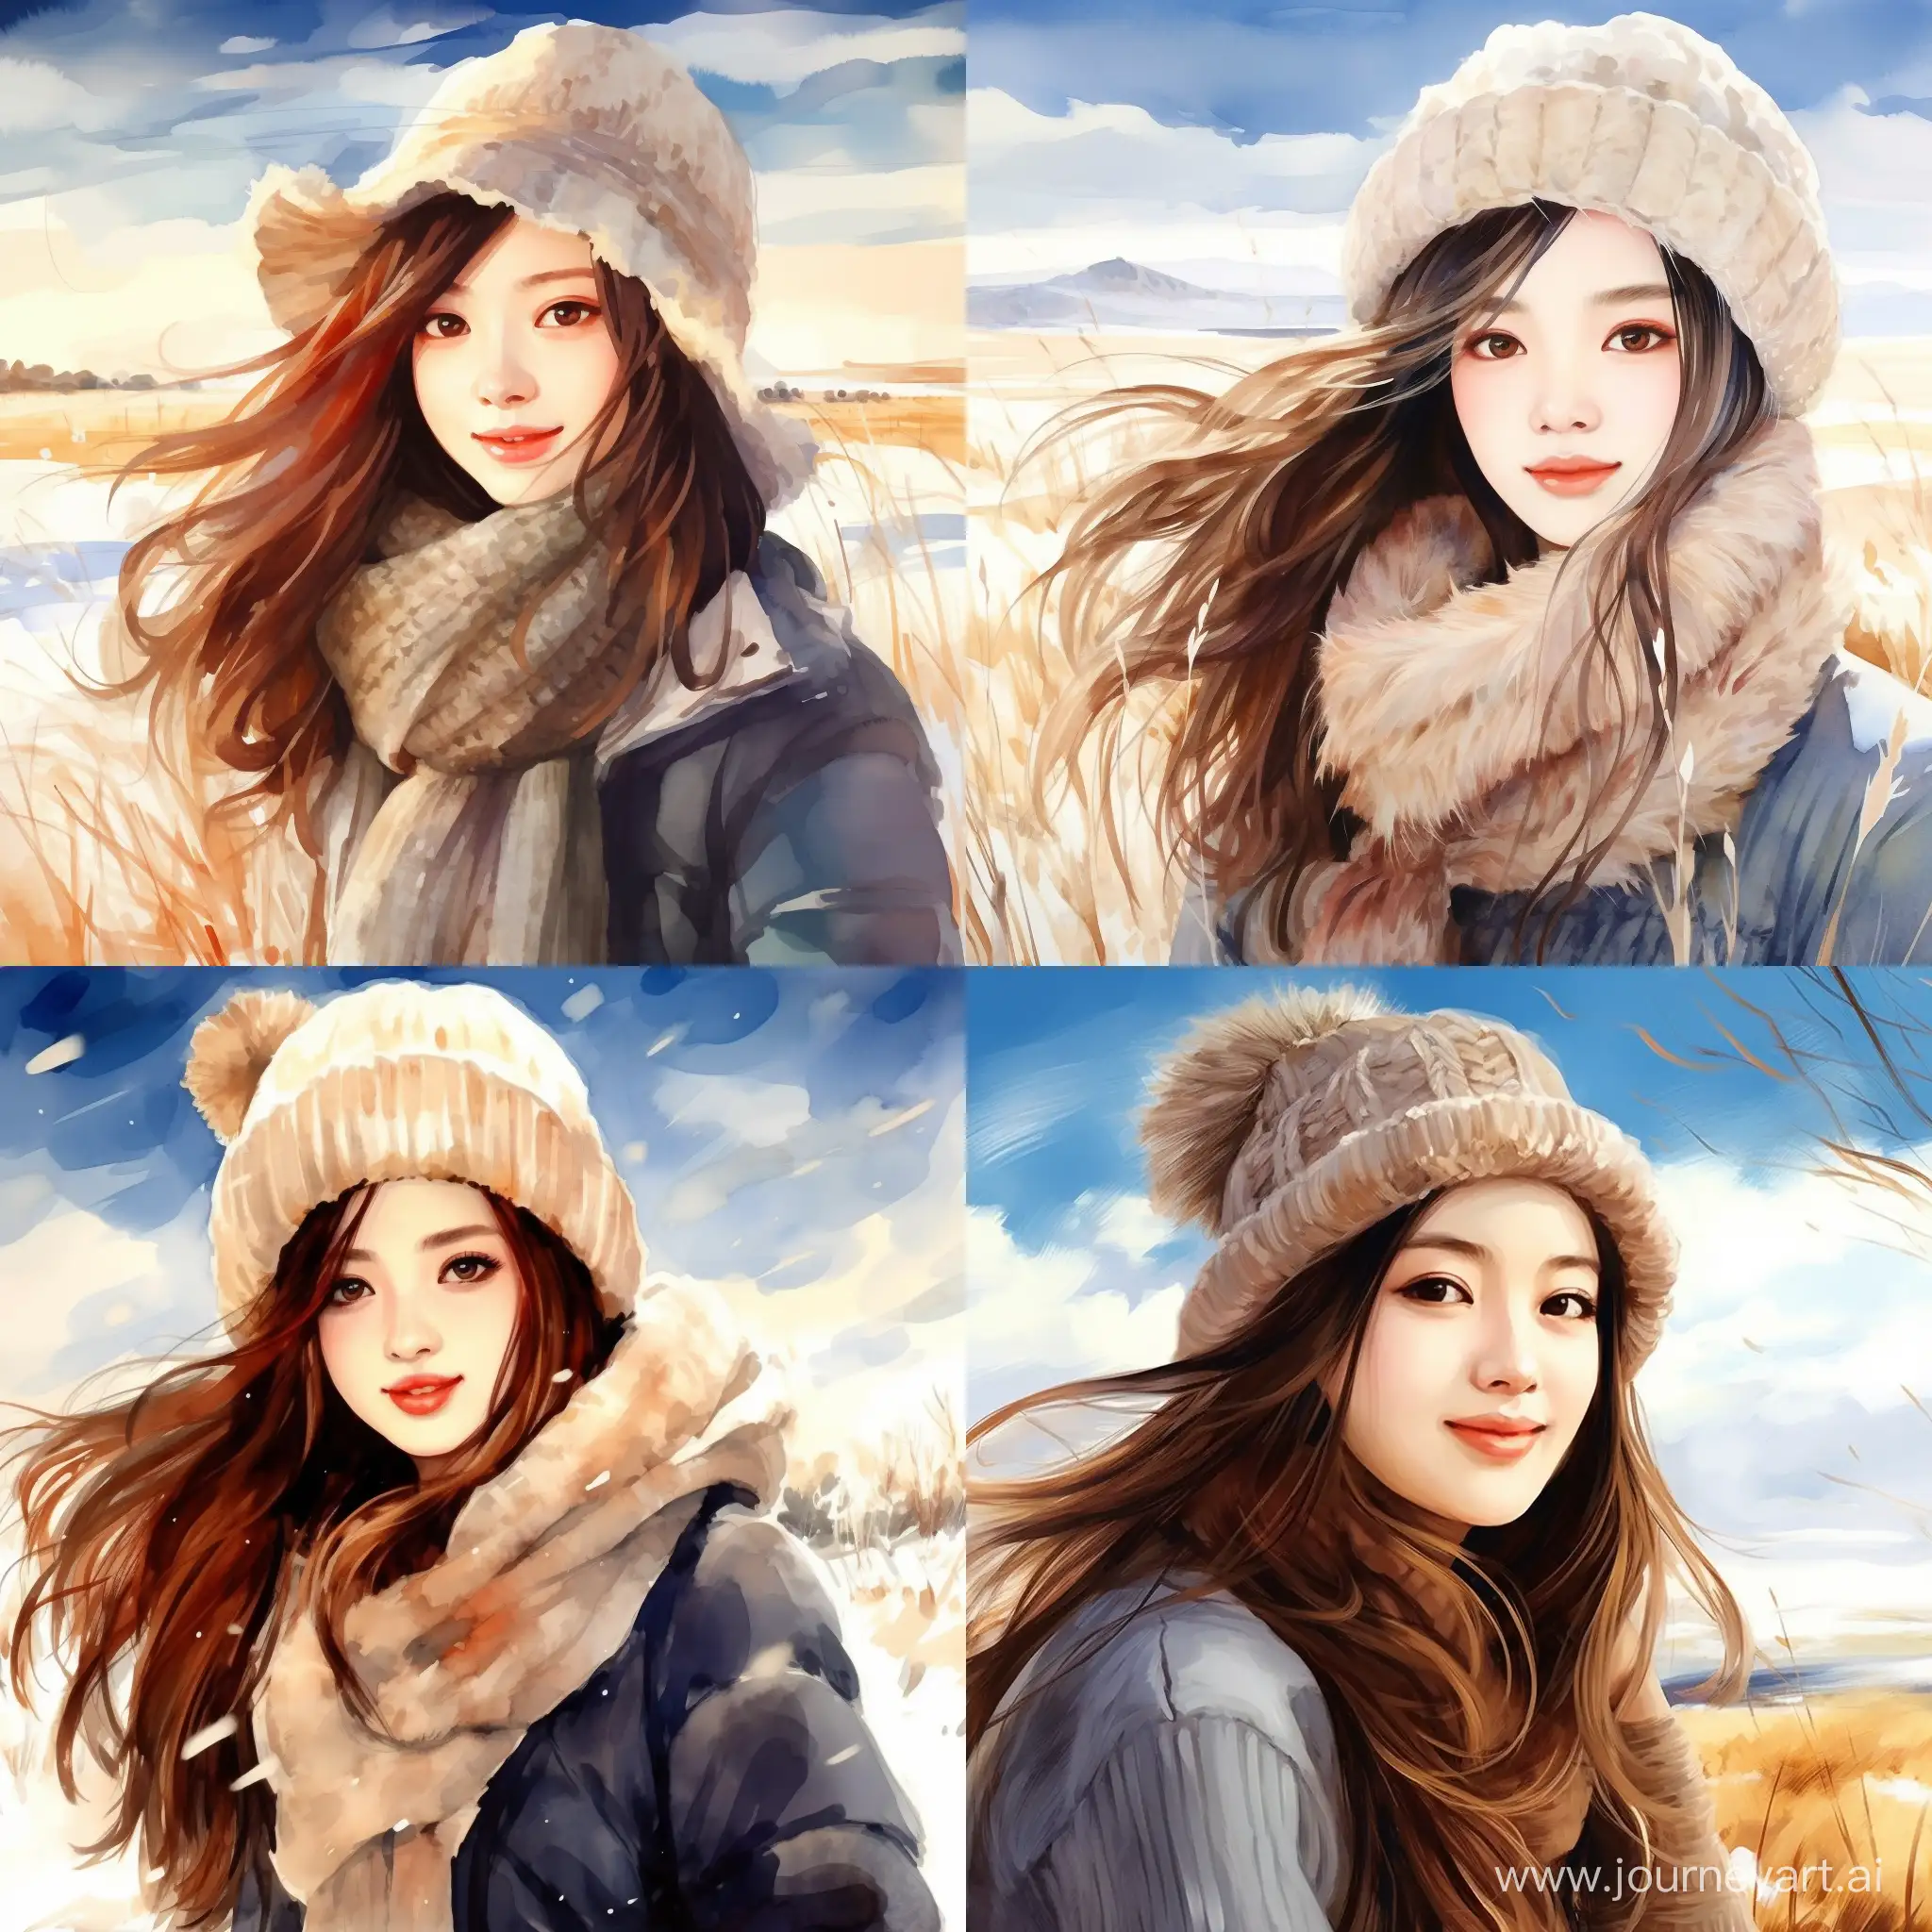 Winter-Morning-Stroll-Asian-Girl-in-Knitted-Attire